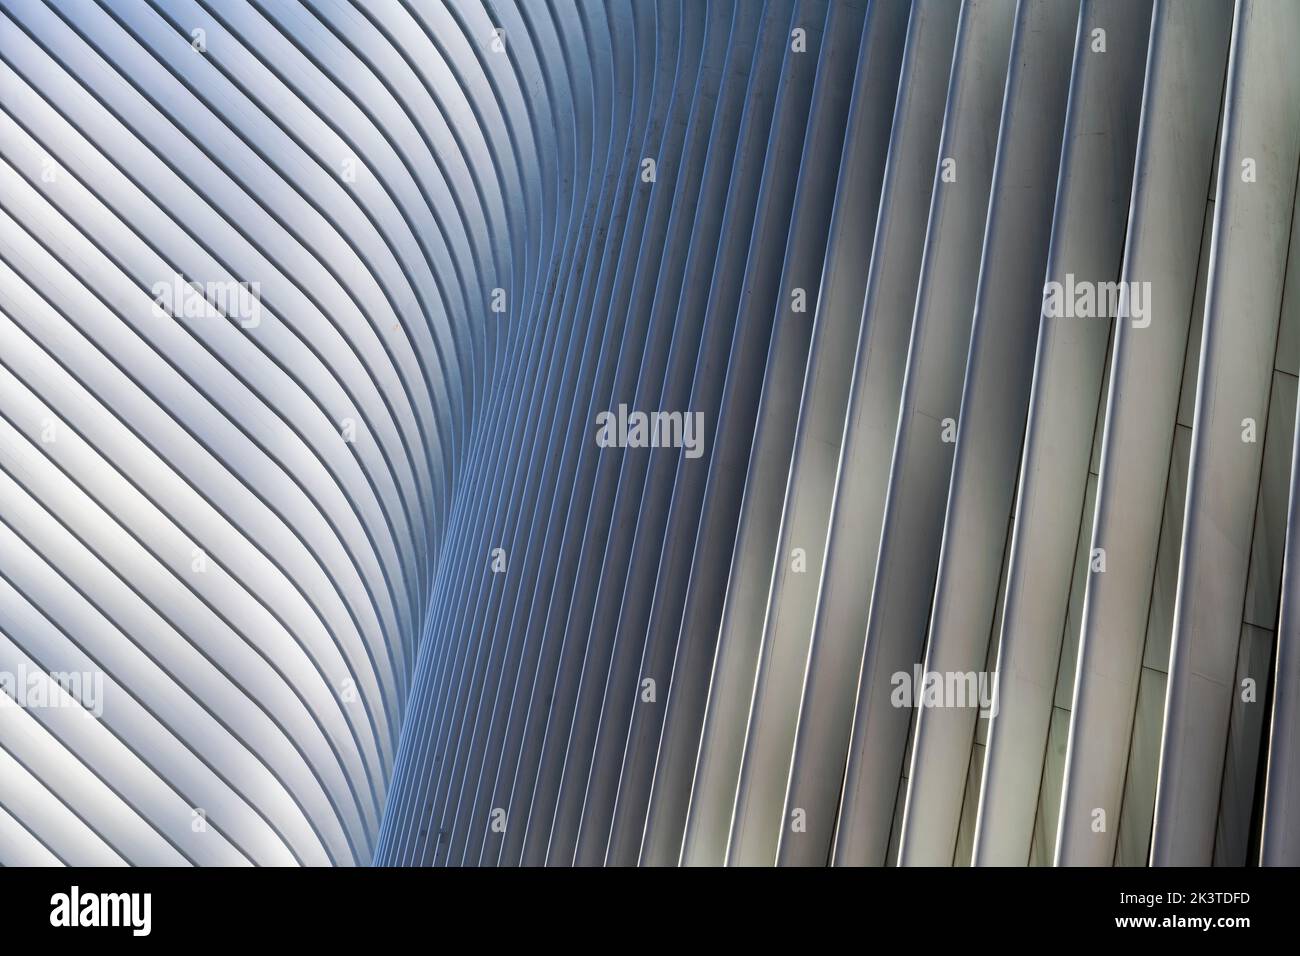 Ribs of Oculus station house designed by architect Santiago Calatrava, World Trade Center station (PATH), Manhattan, New York, USA Stock Photo